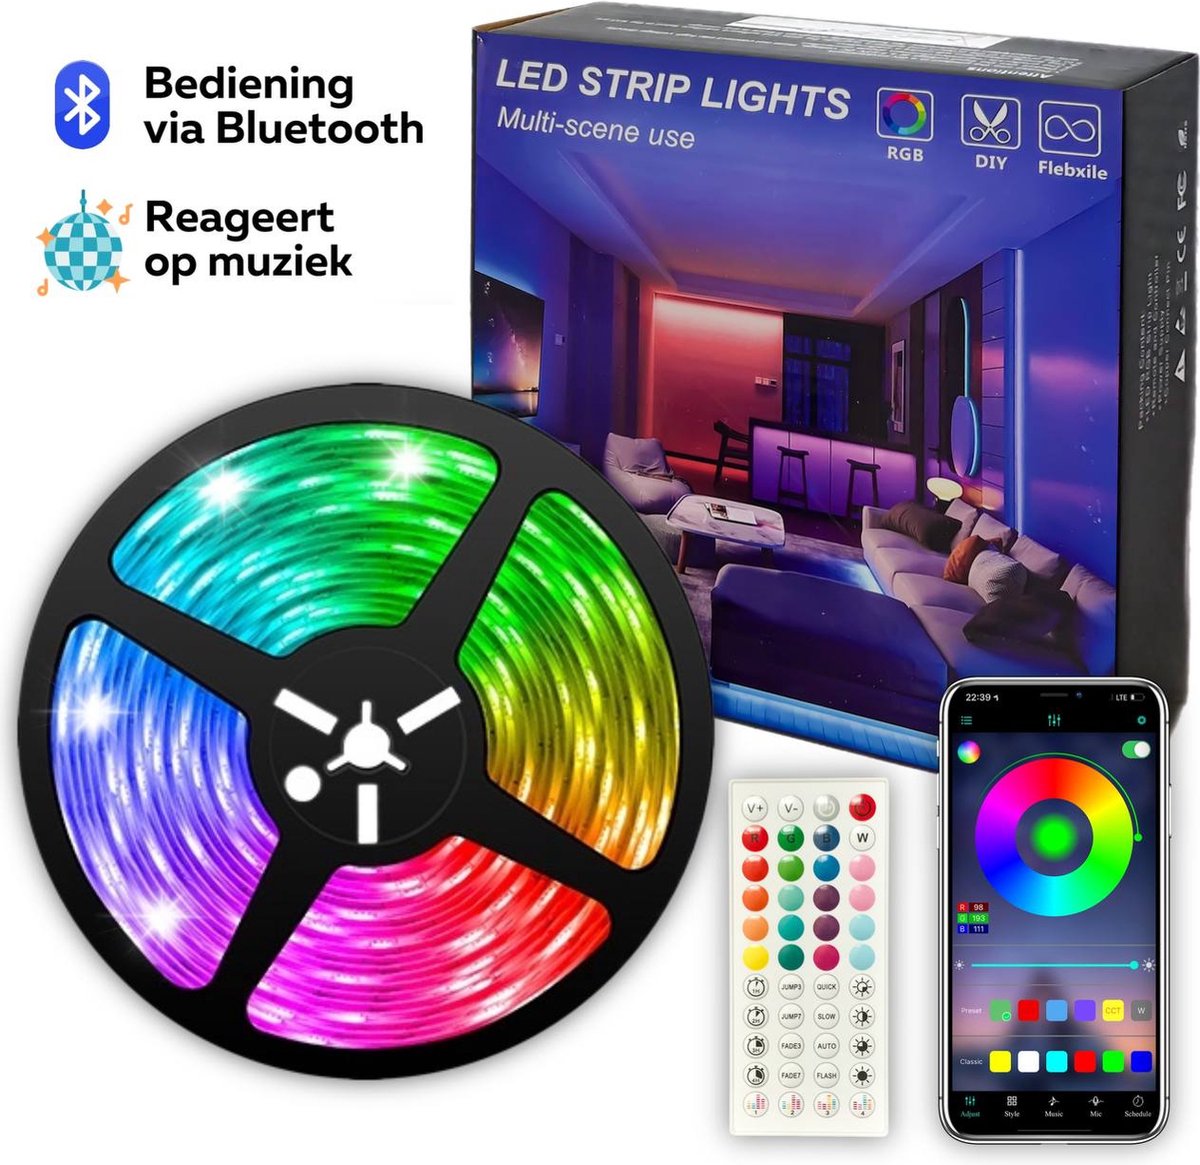 TechHome - Led Strip - 10 Meter - RBG SMD5050 - 16 Miljoen kleuren - Inclusief afstandsbediening - Bediening via App - Bluetooth - Reageert op muziek - Zelfklevend - 18 leds per m - Led light strip - Led lights - Led strips